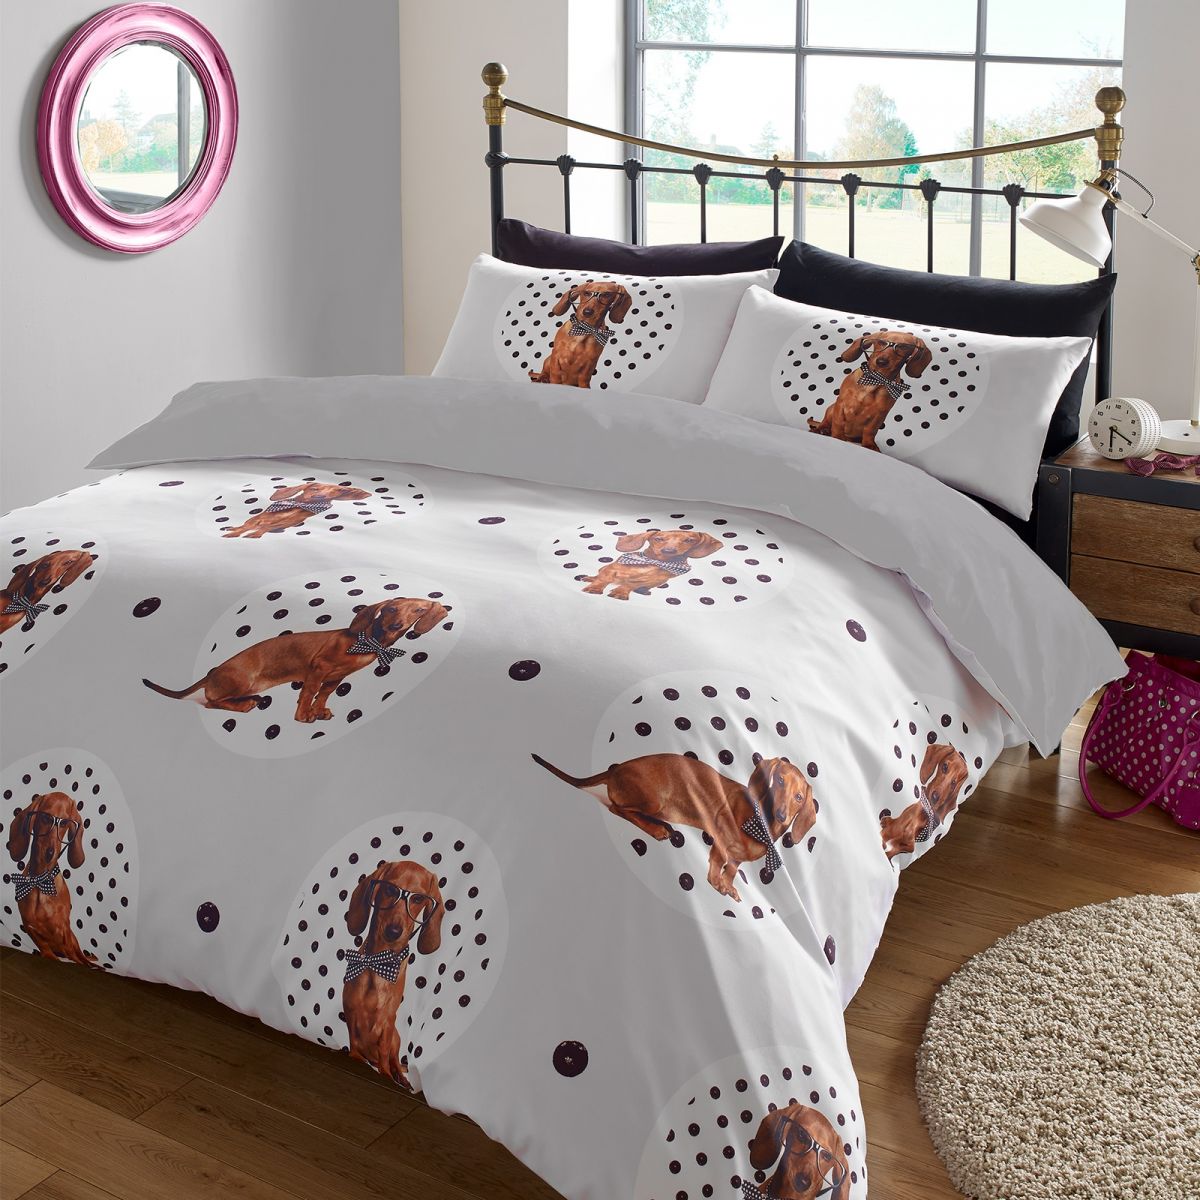 Dreamscene Dachshund Puppy Animal Print Duvet Cover with Pilllowcase Bedding Set - King